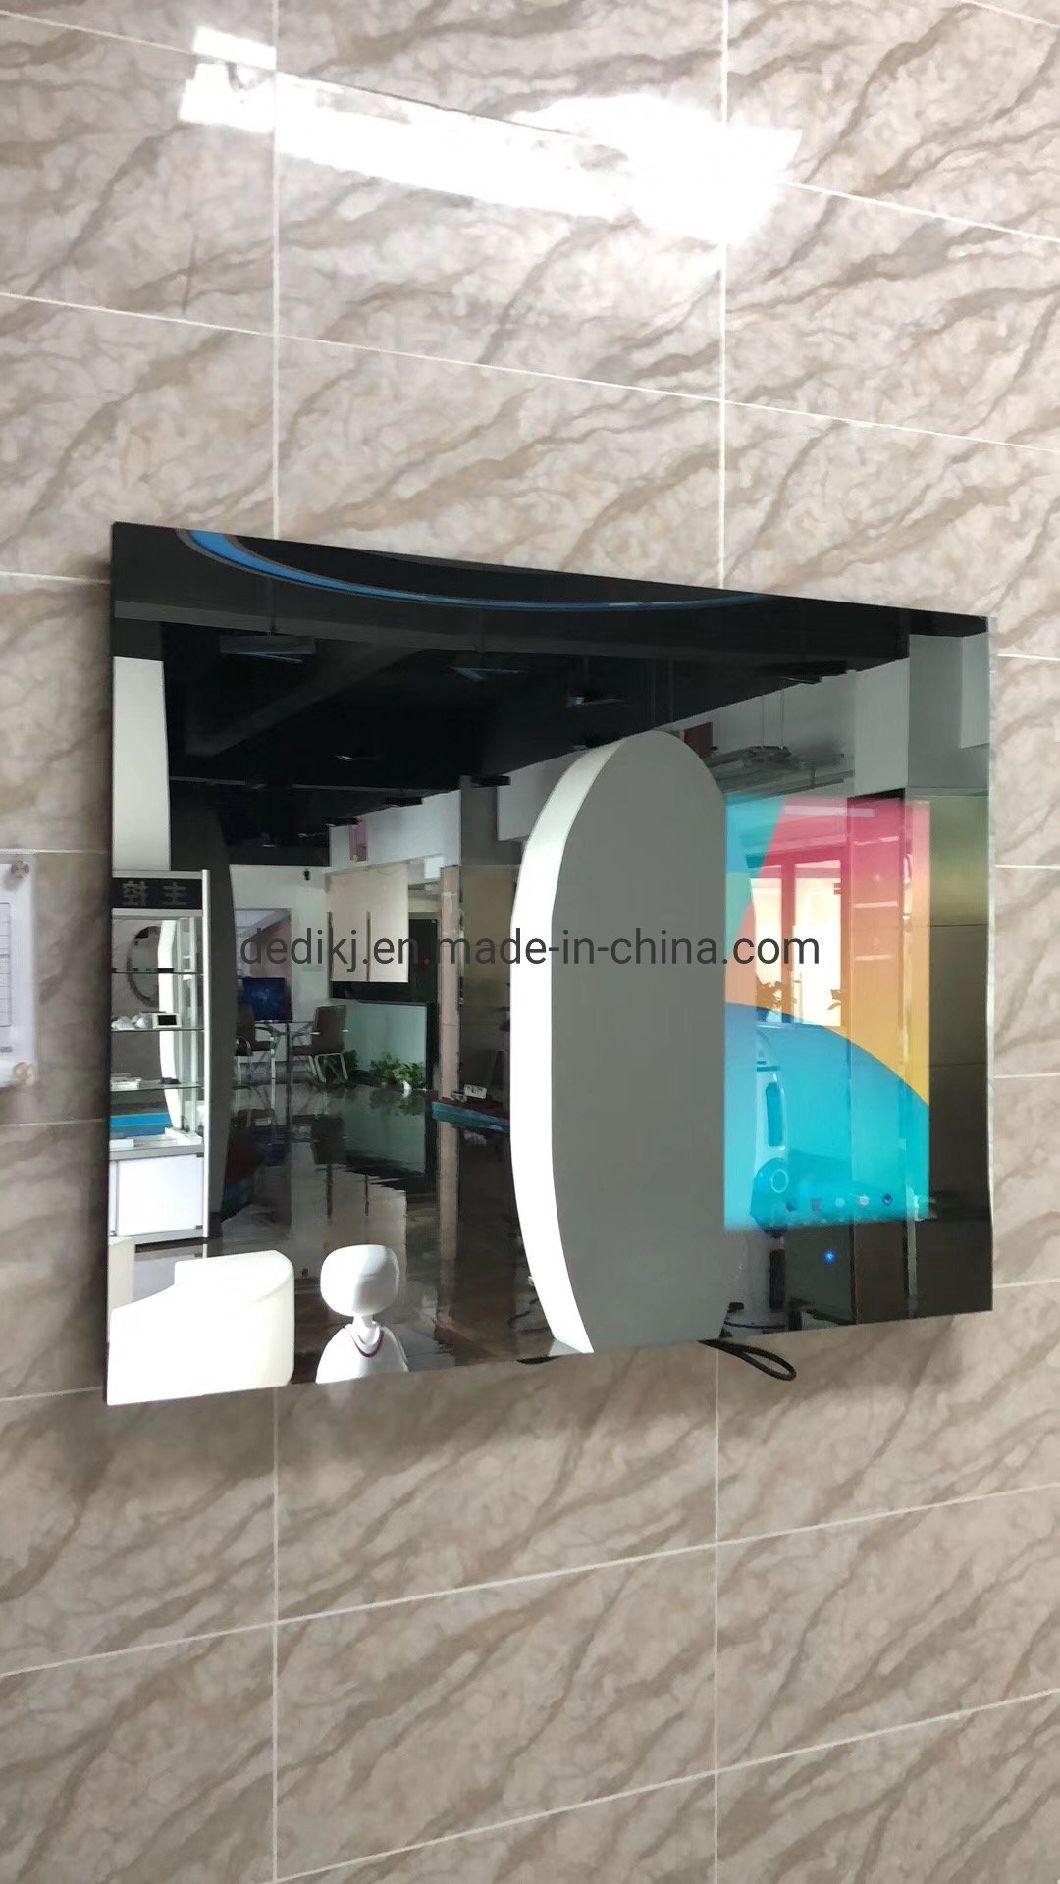 32inch Beauty Intellengent Android Smart Touchscreen Magic Mirror